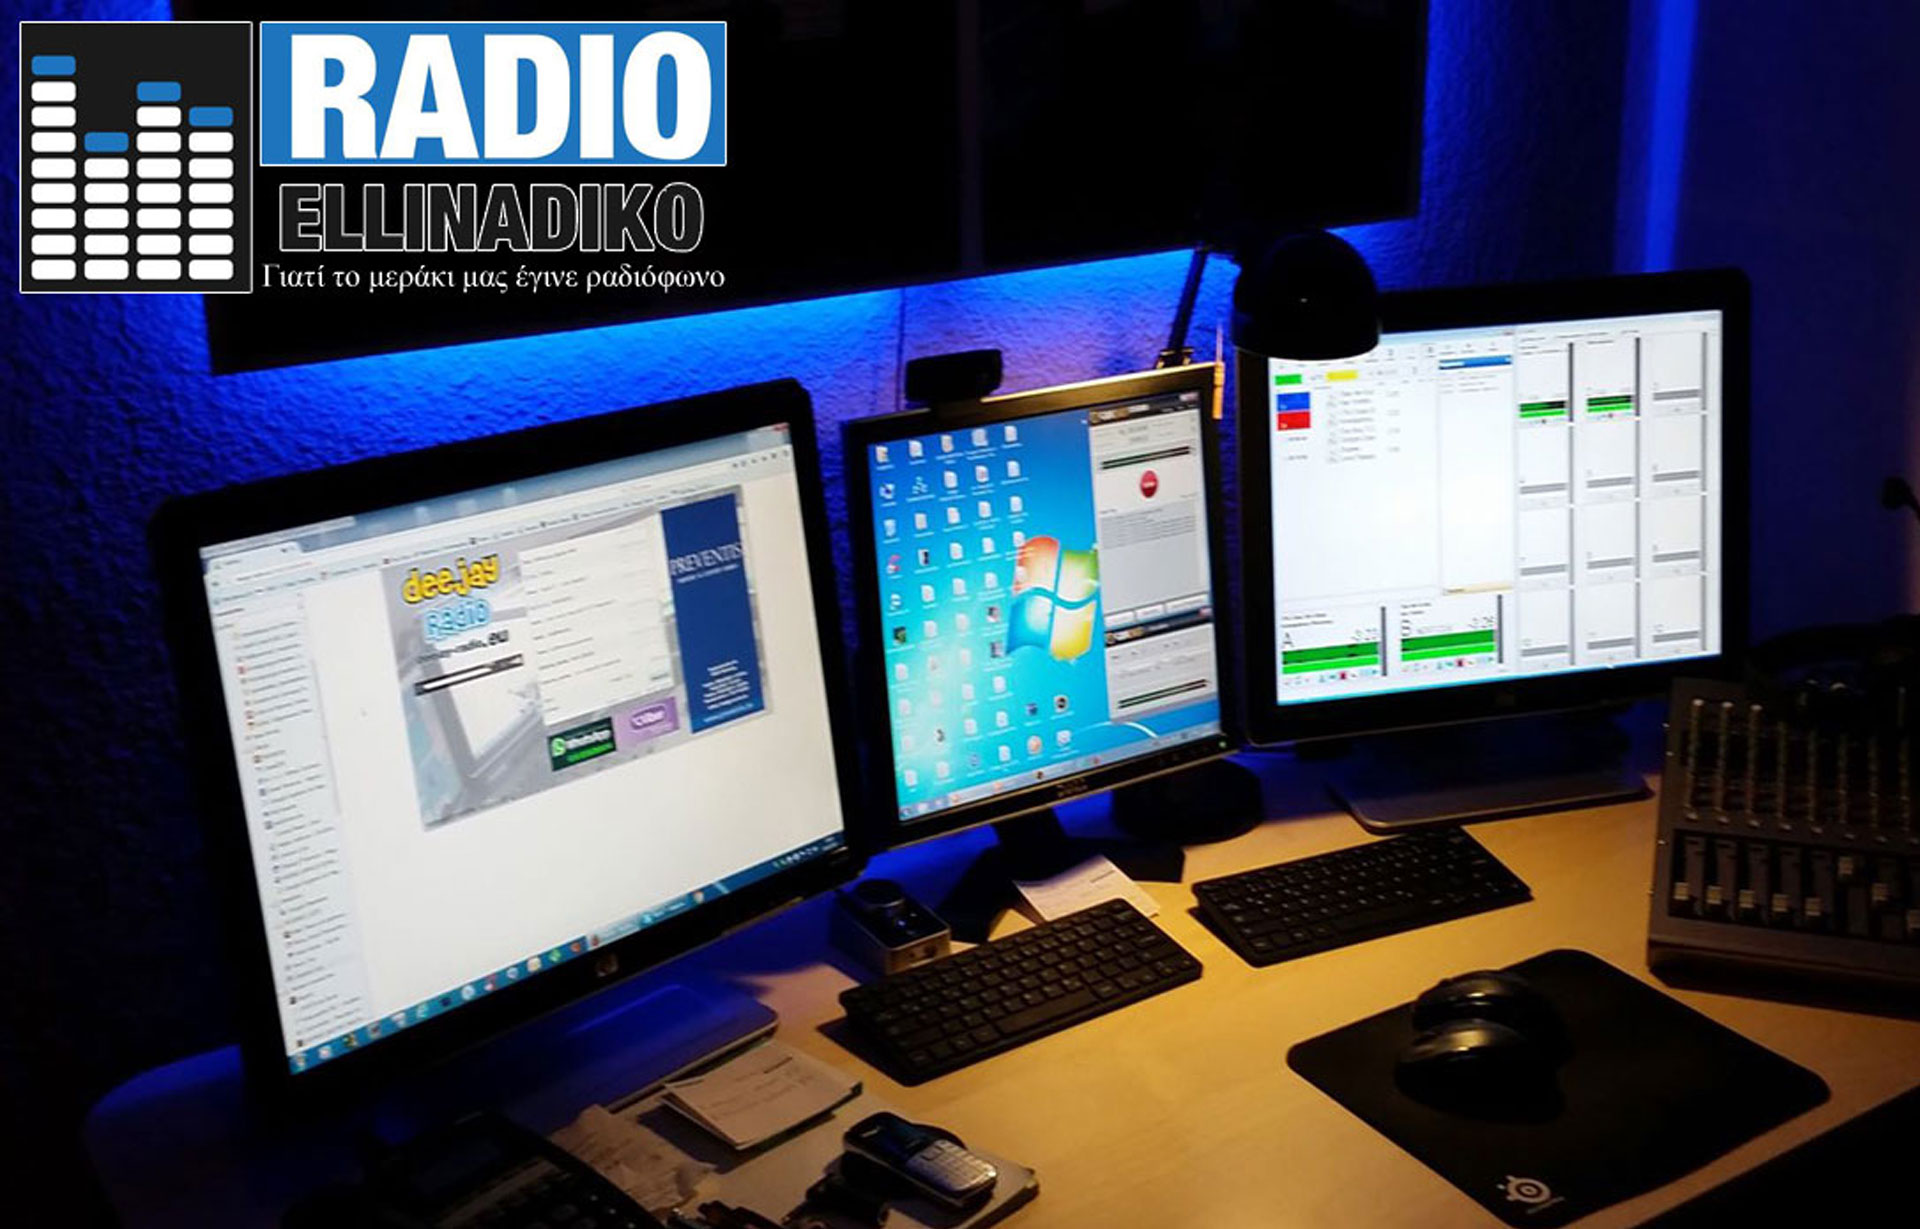 Ellinadiko Nürnberg, ο ελληνικός ραδιοφωνικός σταθμός της Νυρεμβέργης